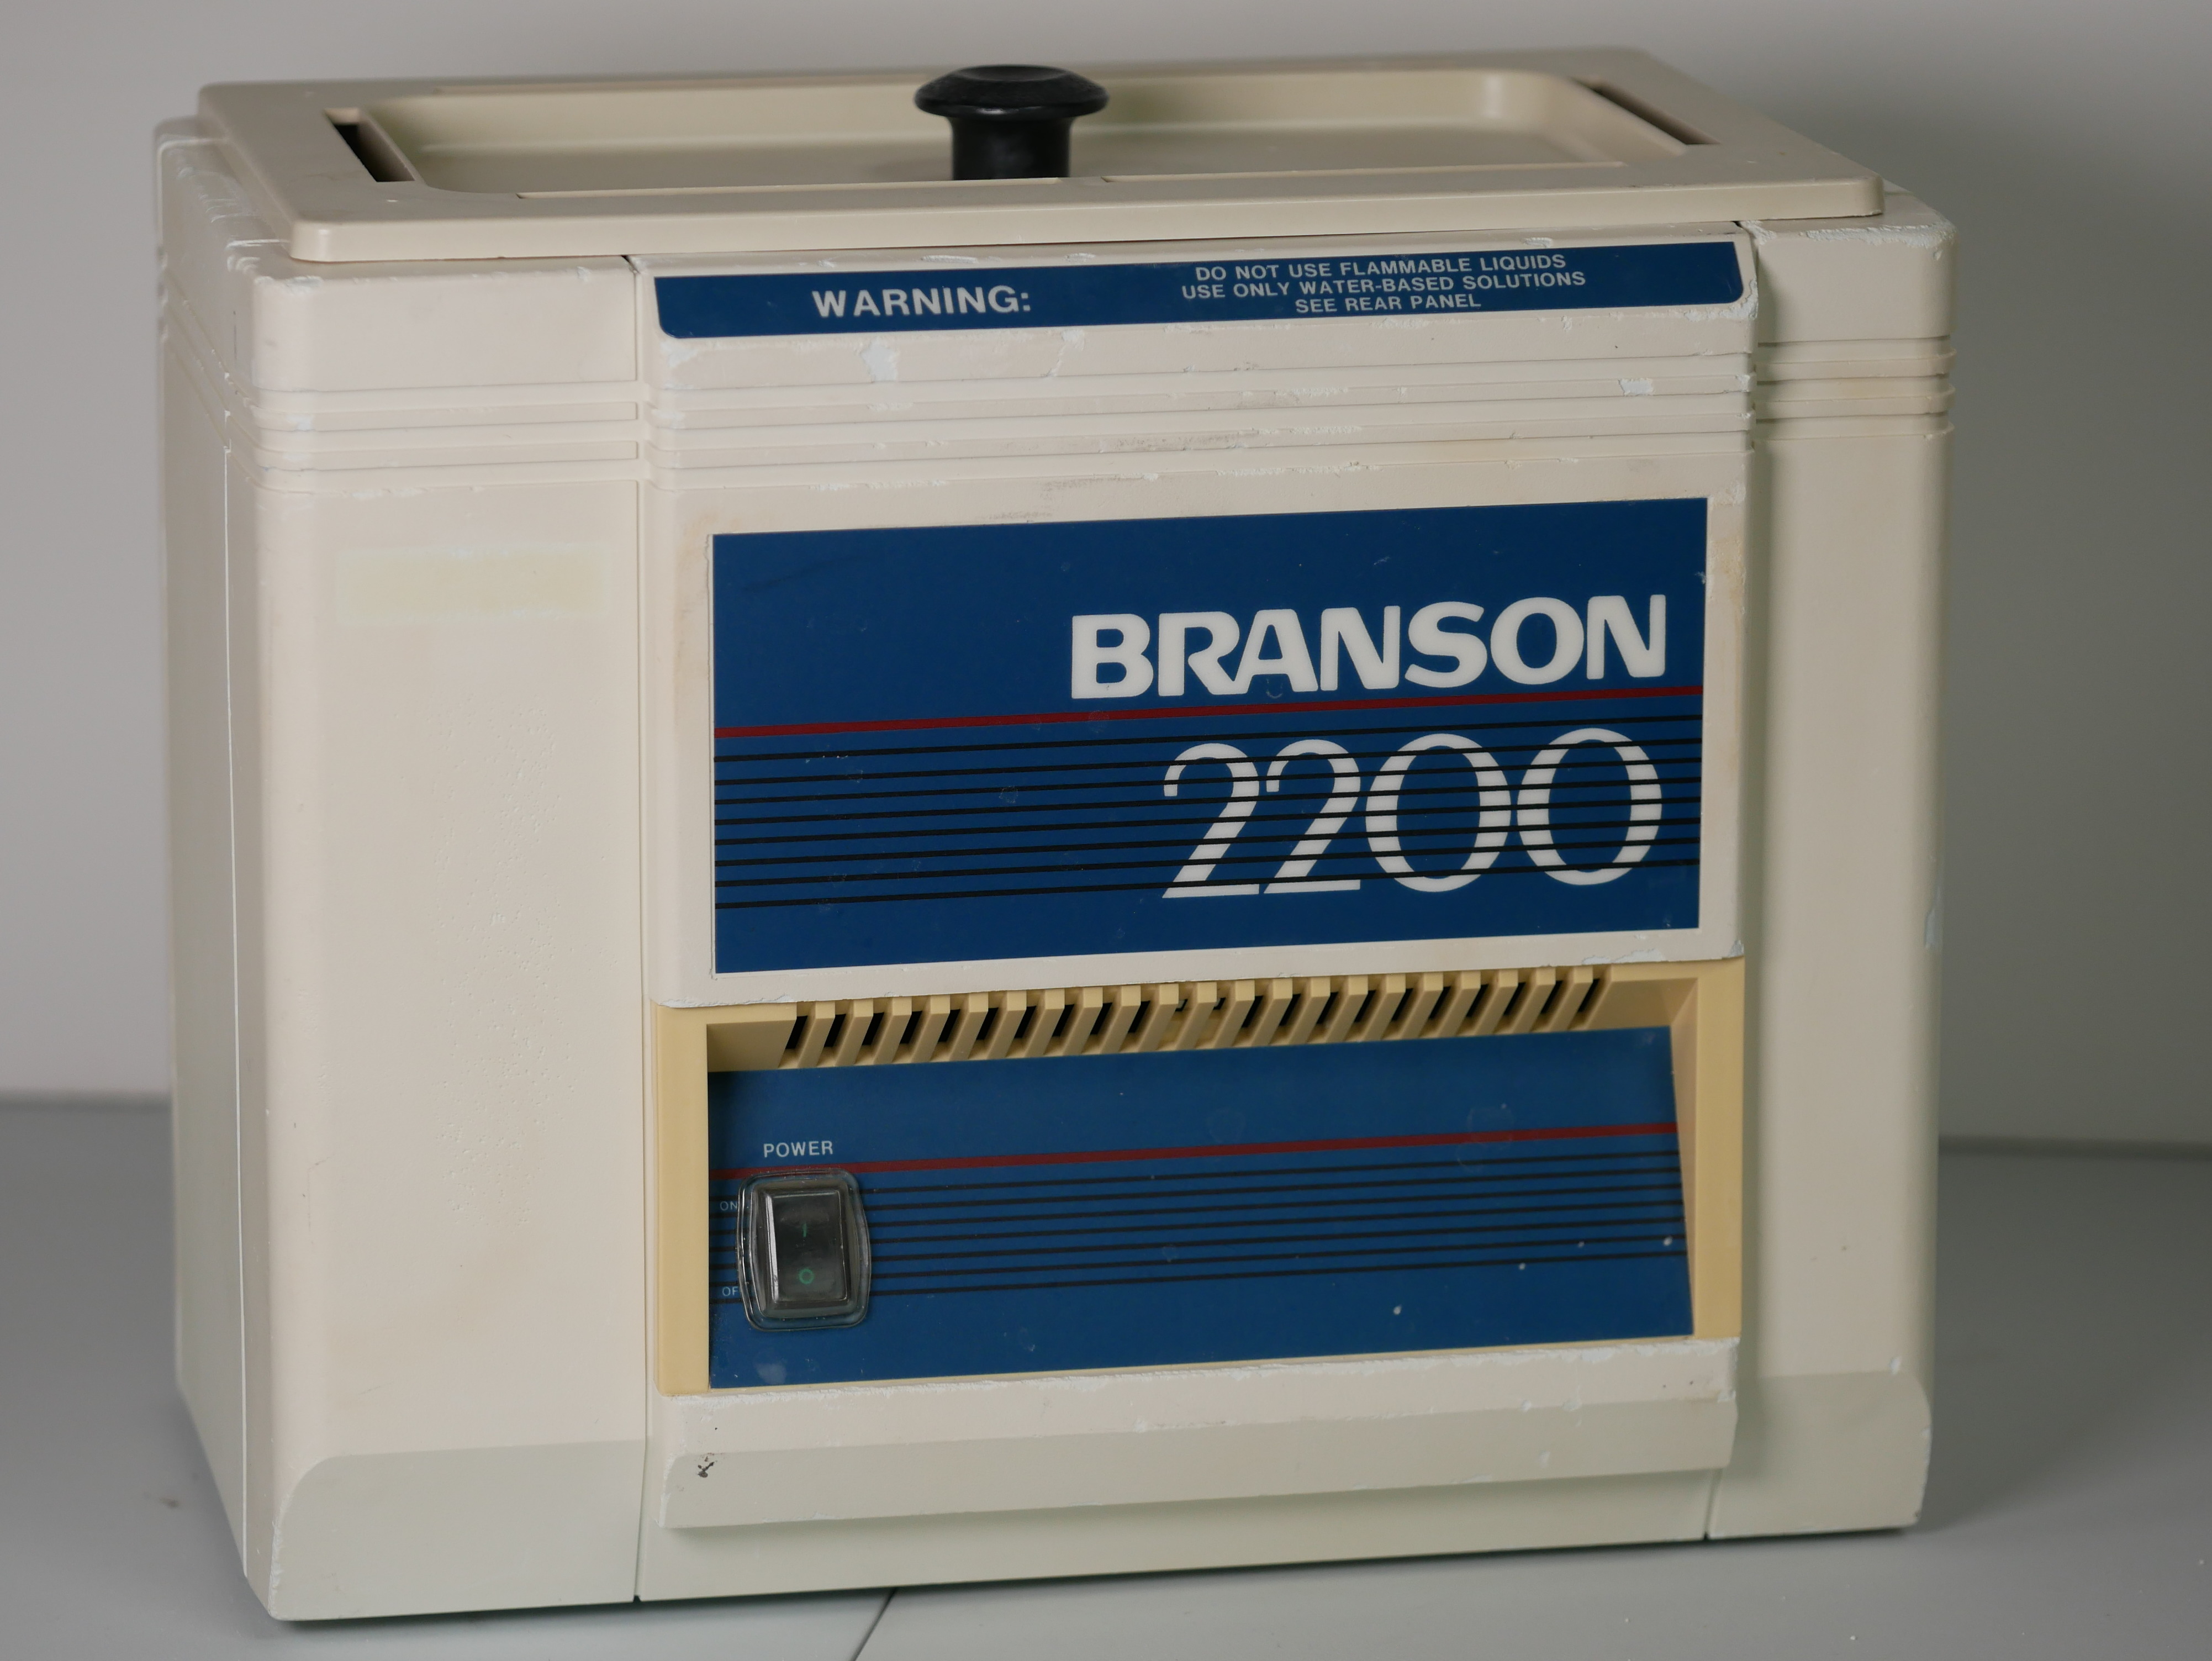 Branson 2200 Sonicator